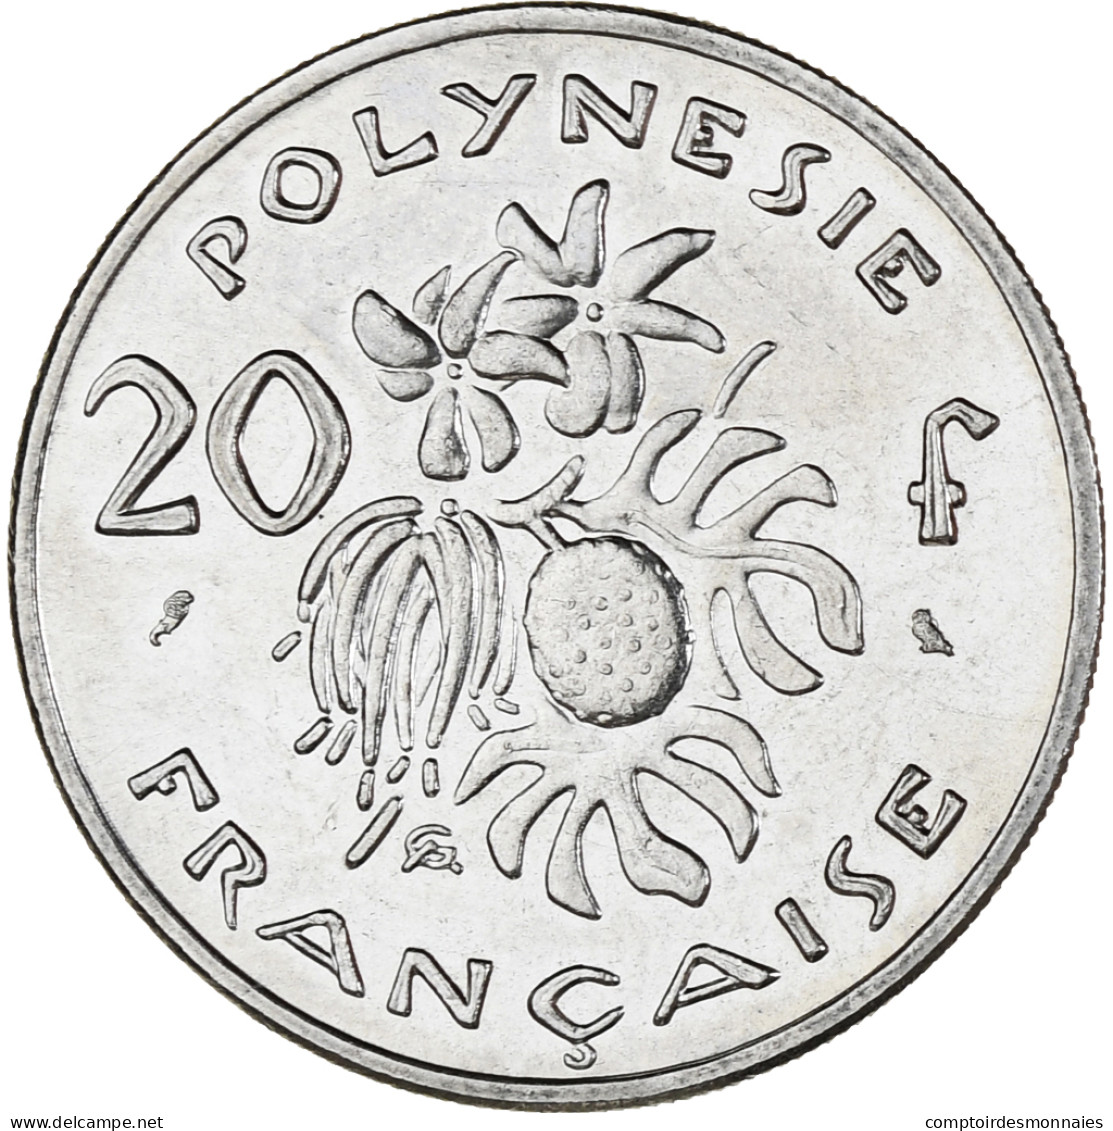 Monnaie, Polynésie Française, 20 Francs, 1972, Paris, SUP, Nickel, KM:9 - Polinesia Francesa